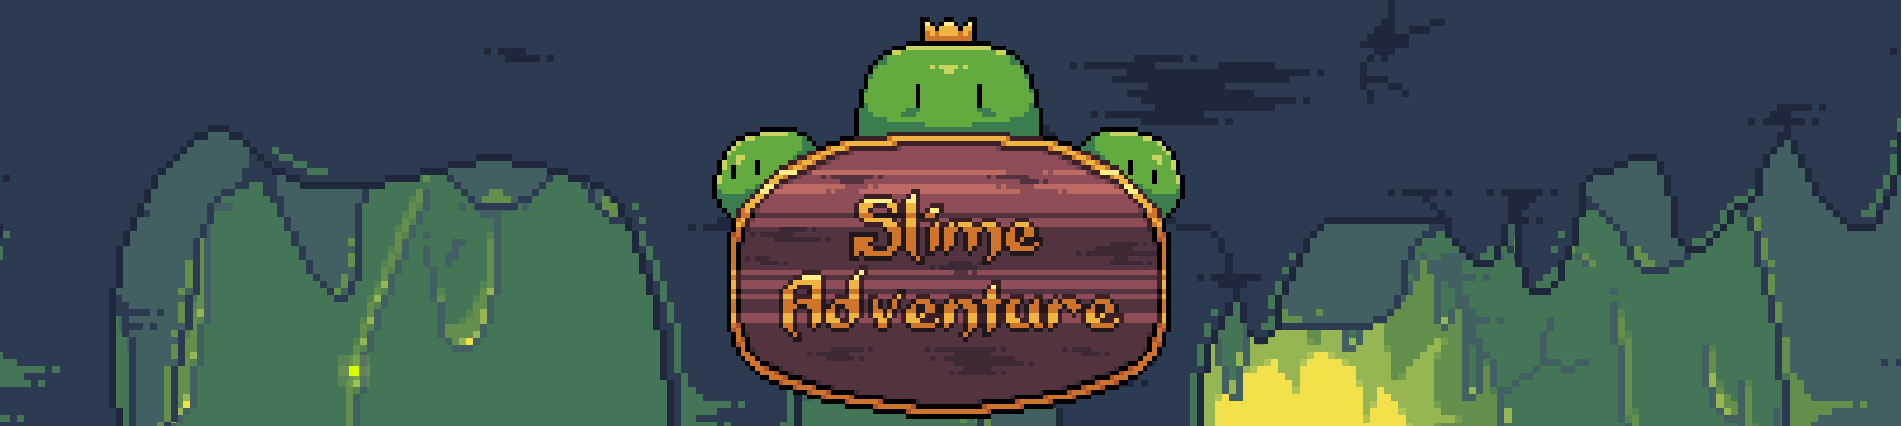 Slime Adventure - School project